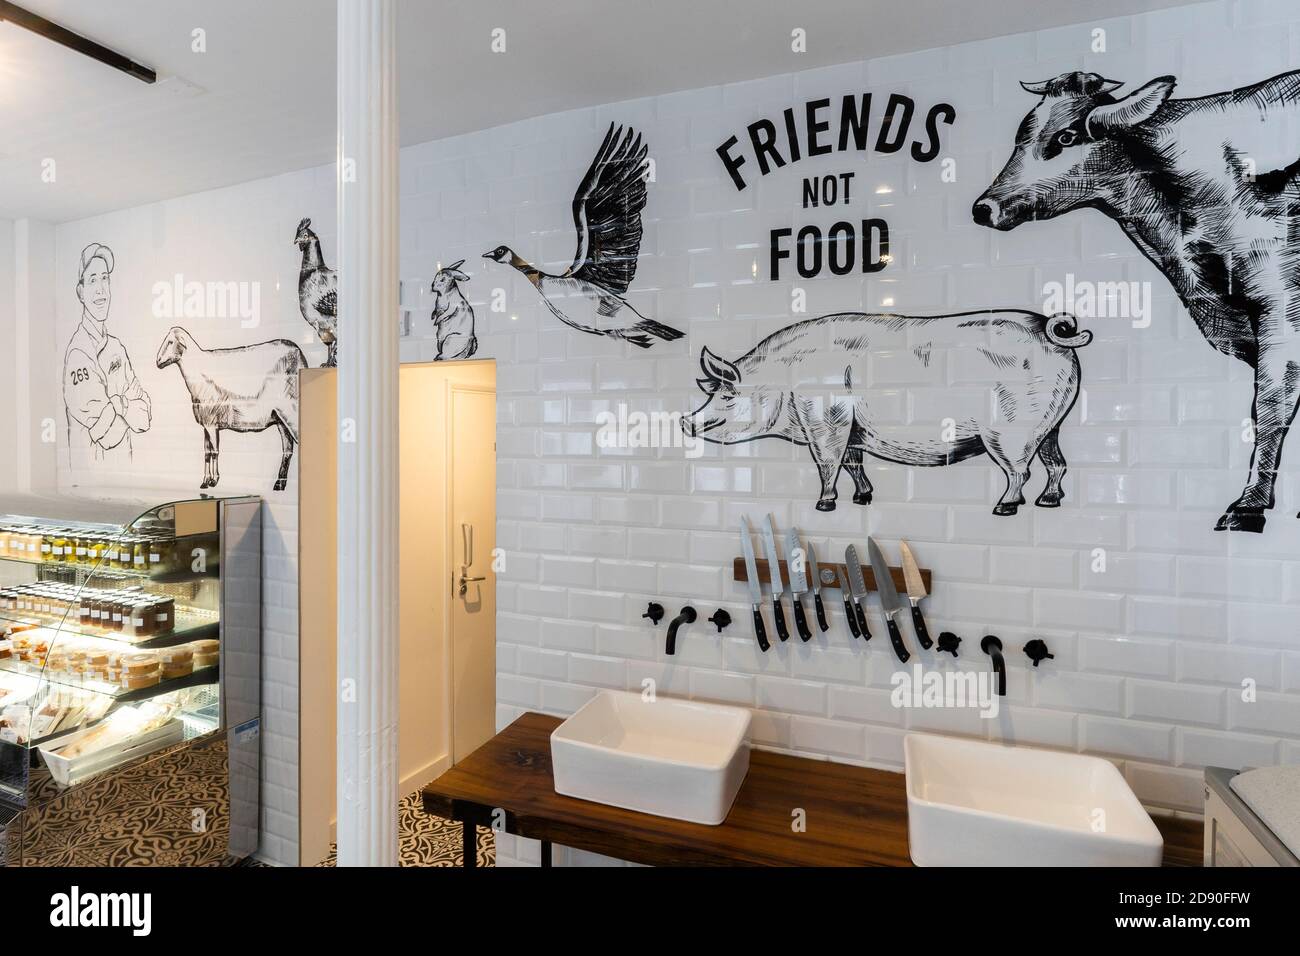 Rudys Vegan Butcher Delikatessengeschäft wird in Islington London eröffnet. Stockfoto